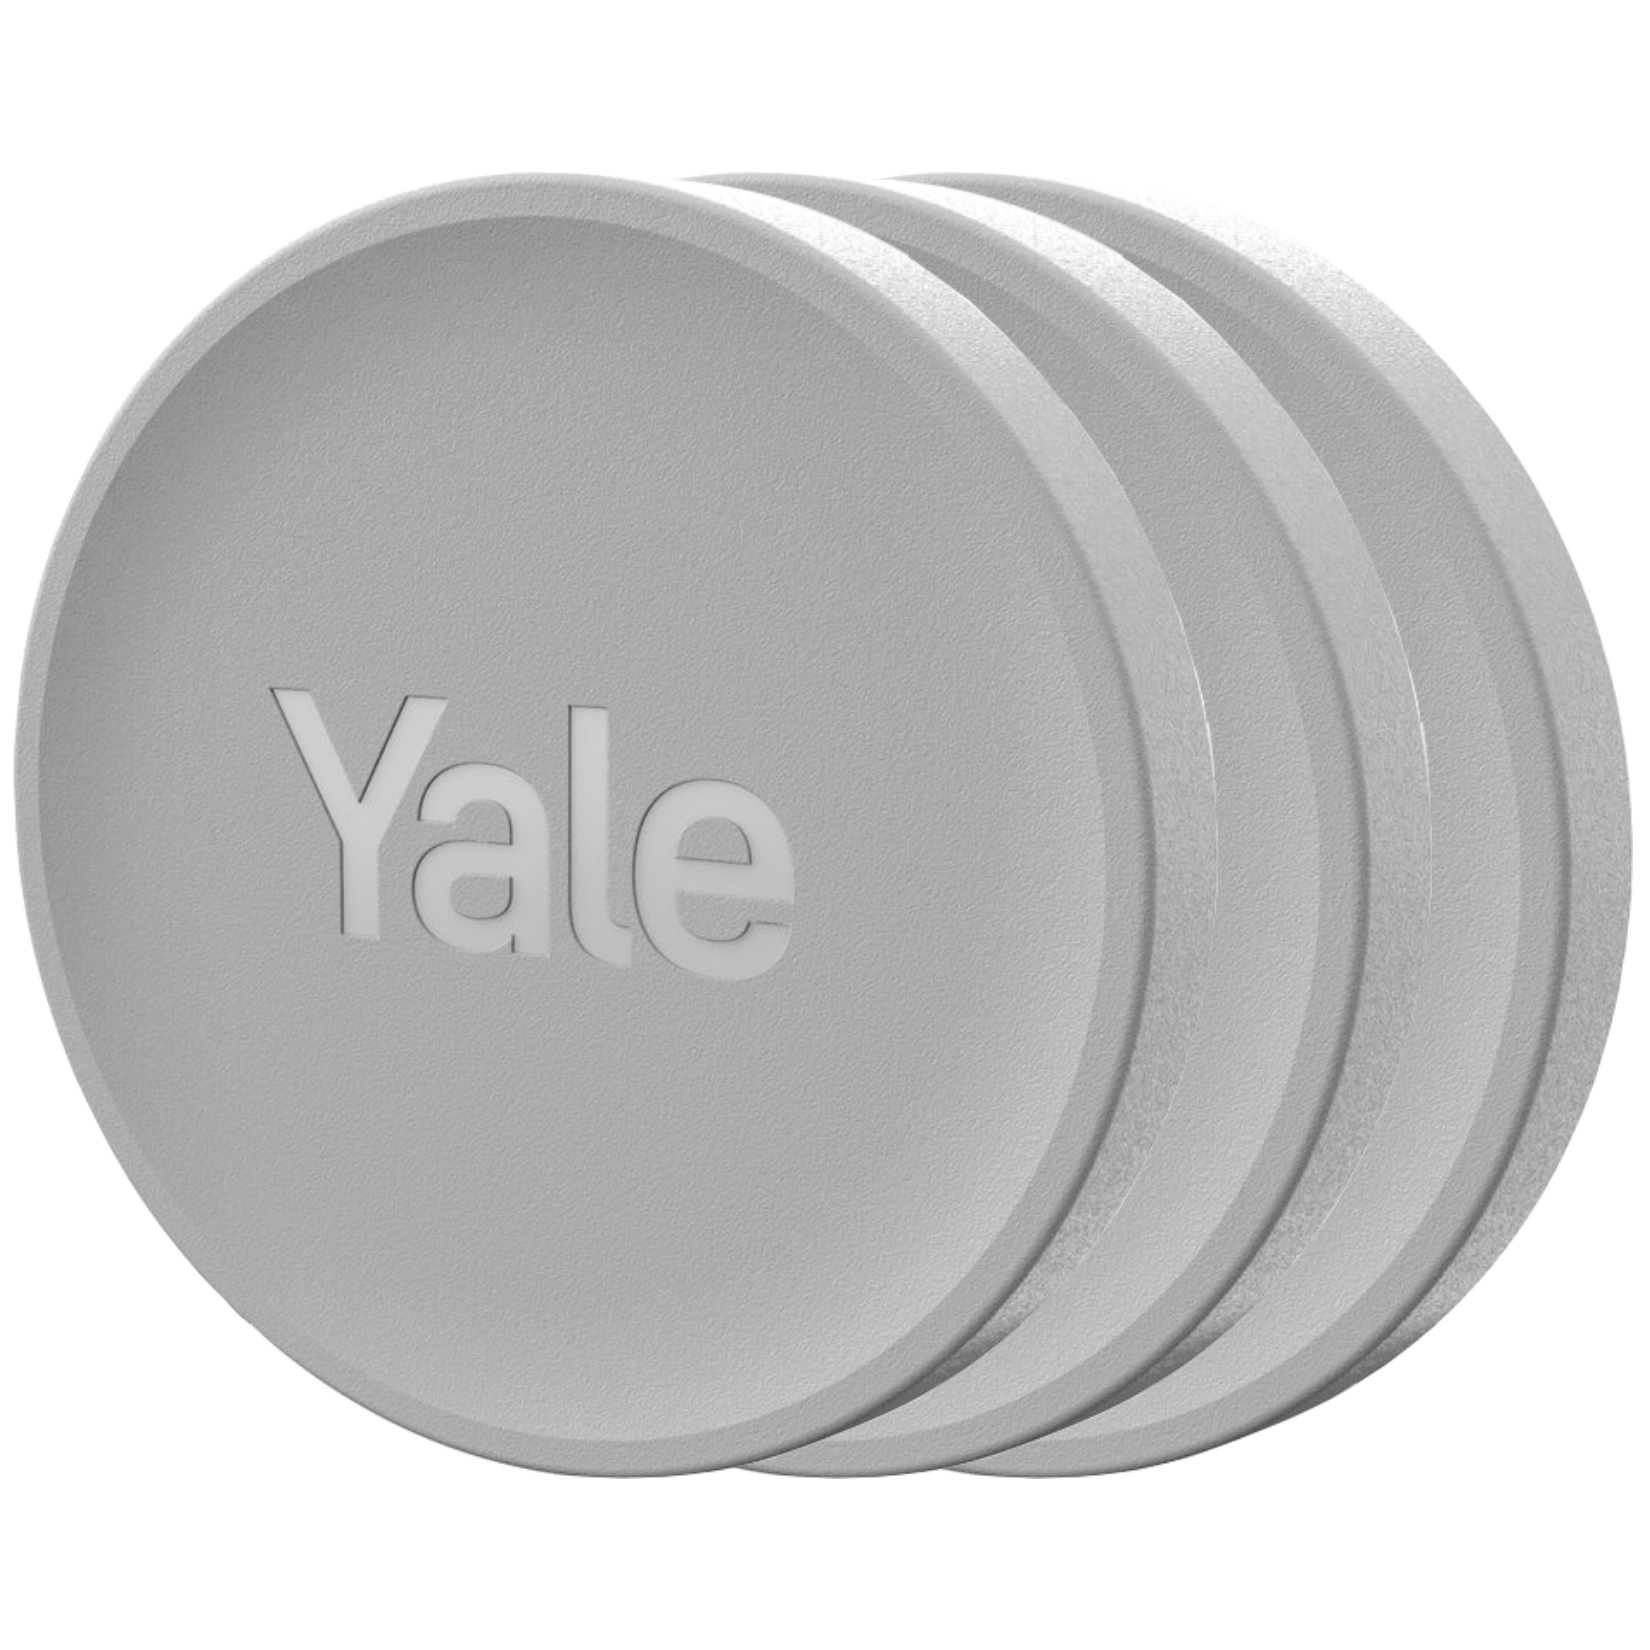 Nadajnik Yale Dot w kolorze srebrnym